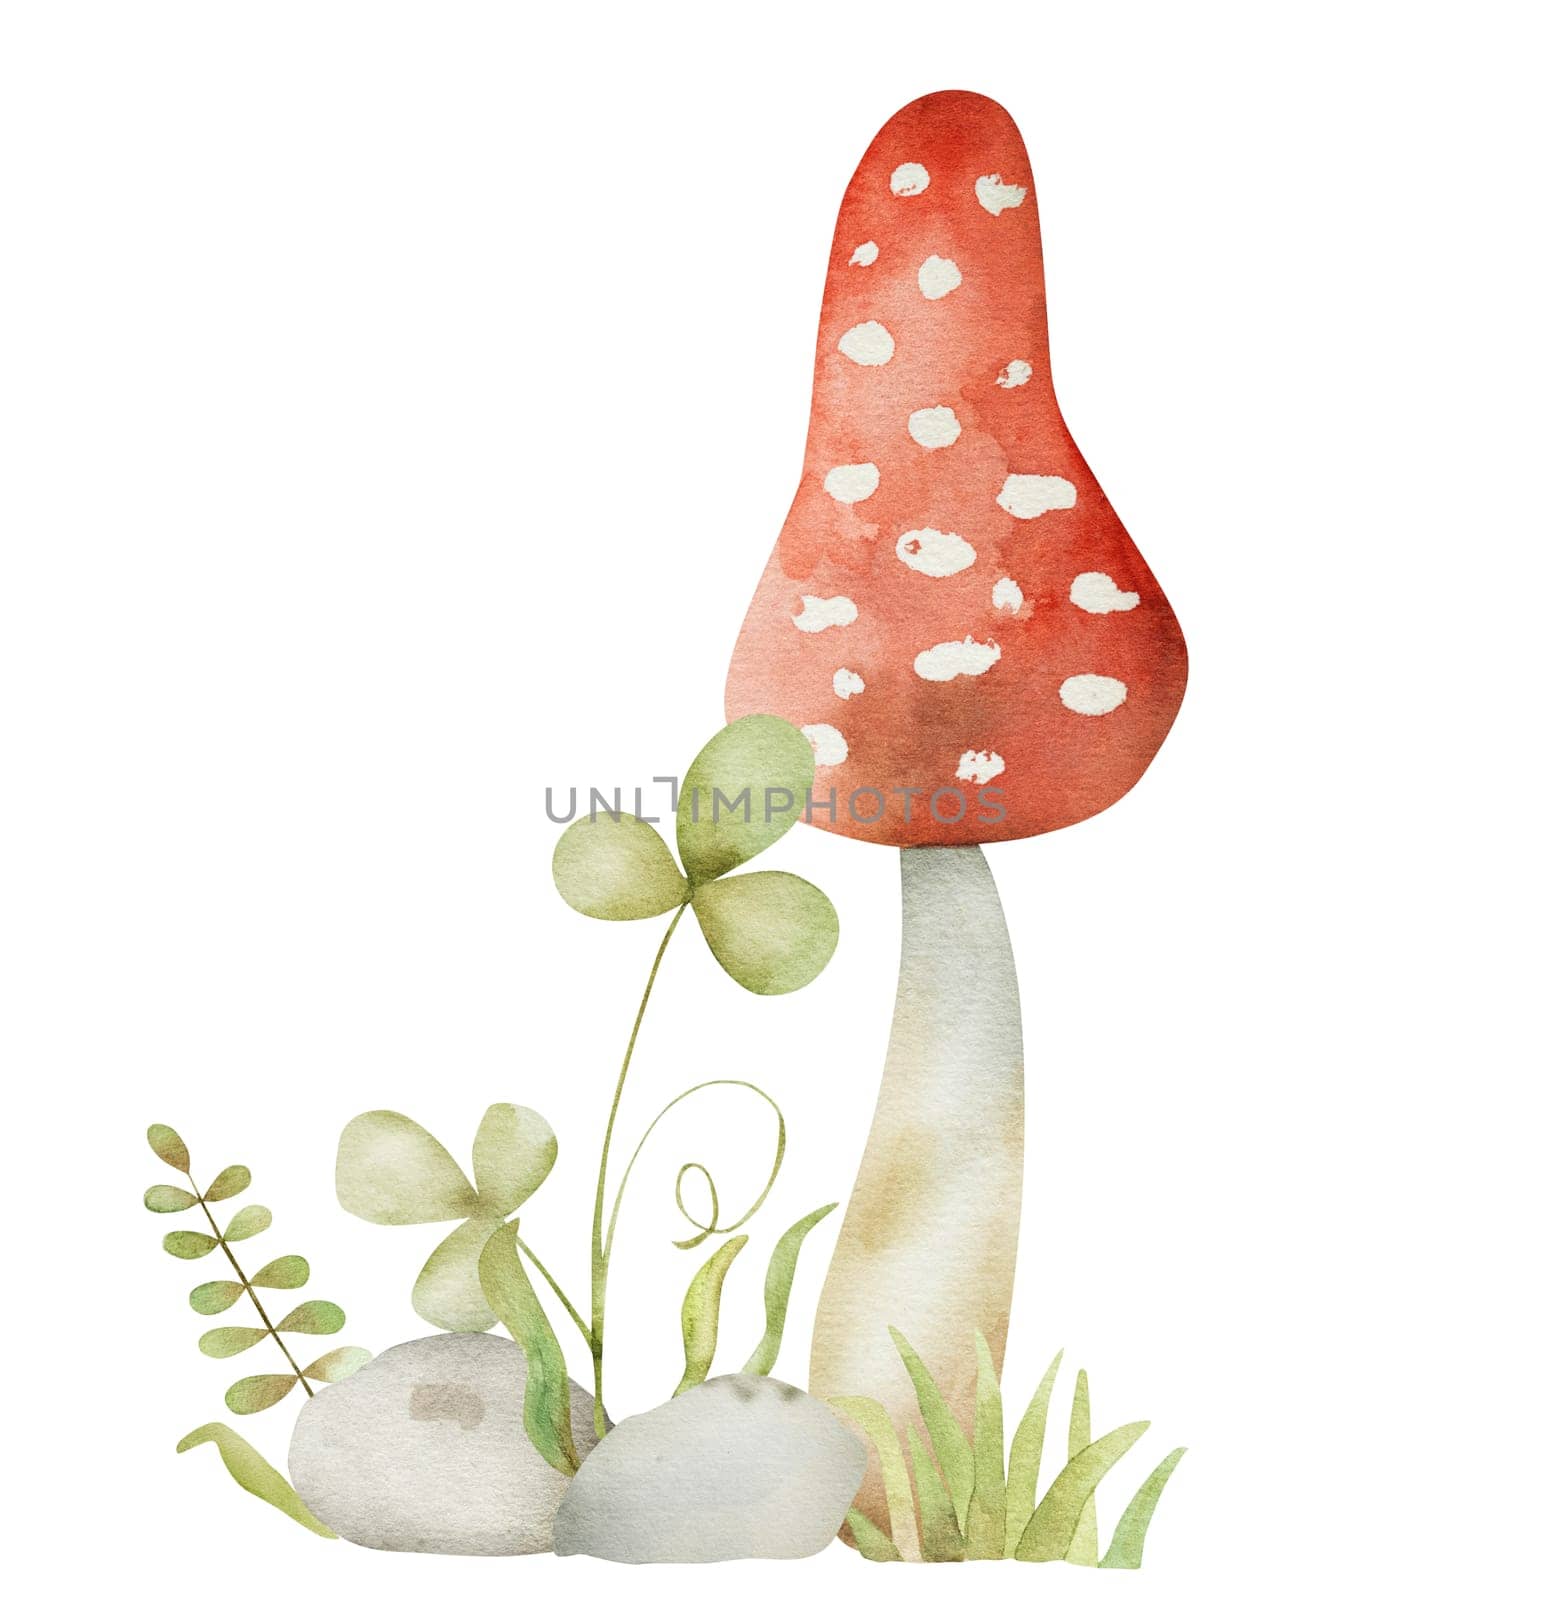 Mushroom watercolor cartoon painting for decoration by tan4ikk1